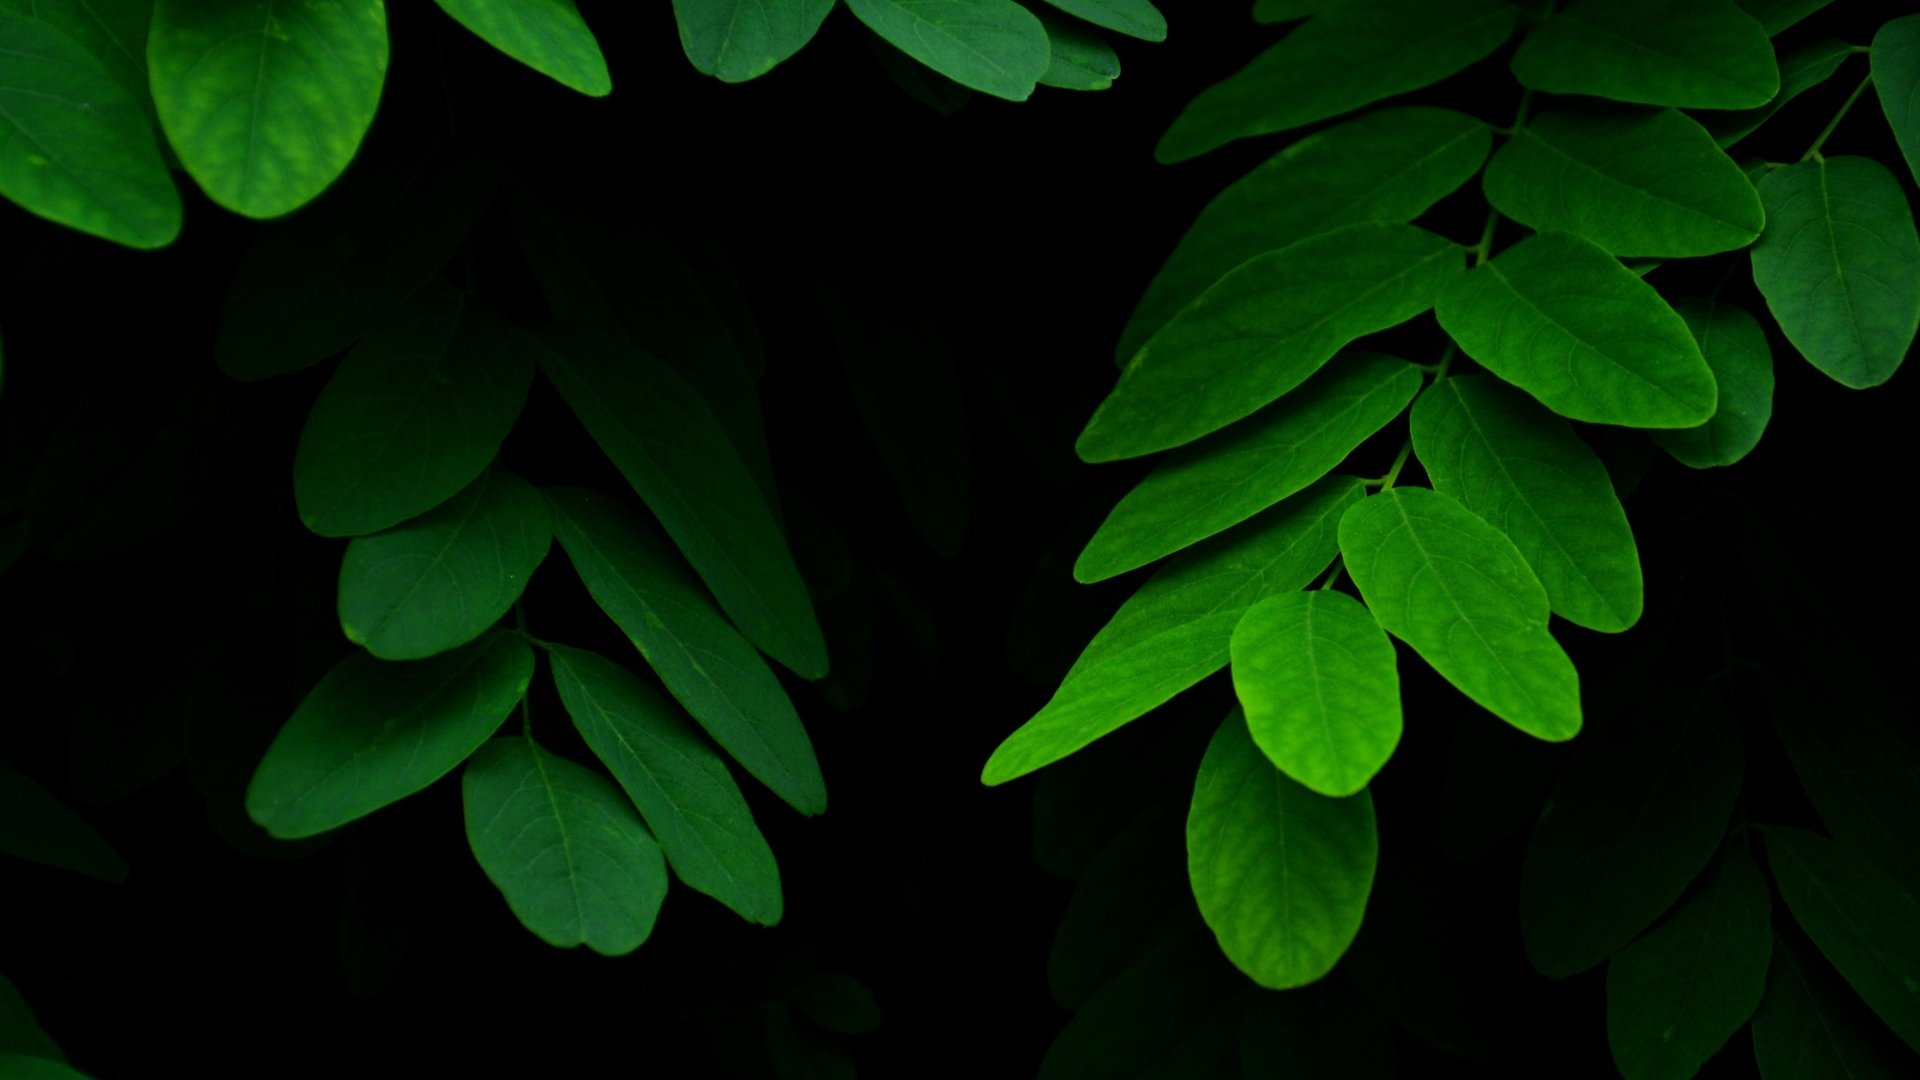 Green Leaves 4k Ultra HD Wallpaper | Background Image | 3840x2160